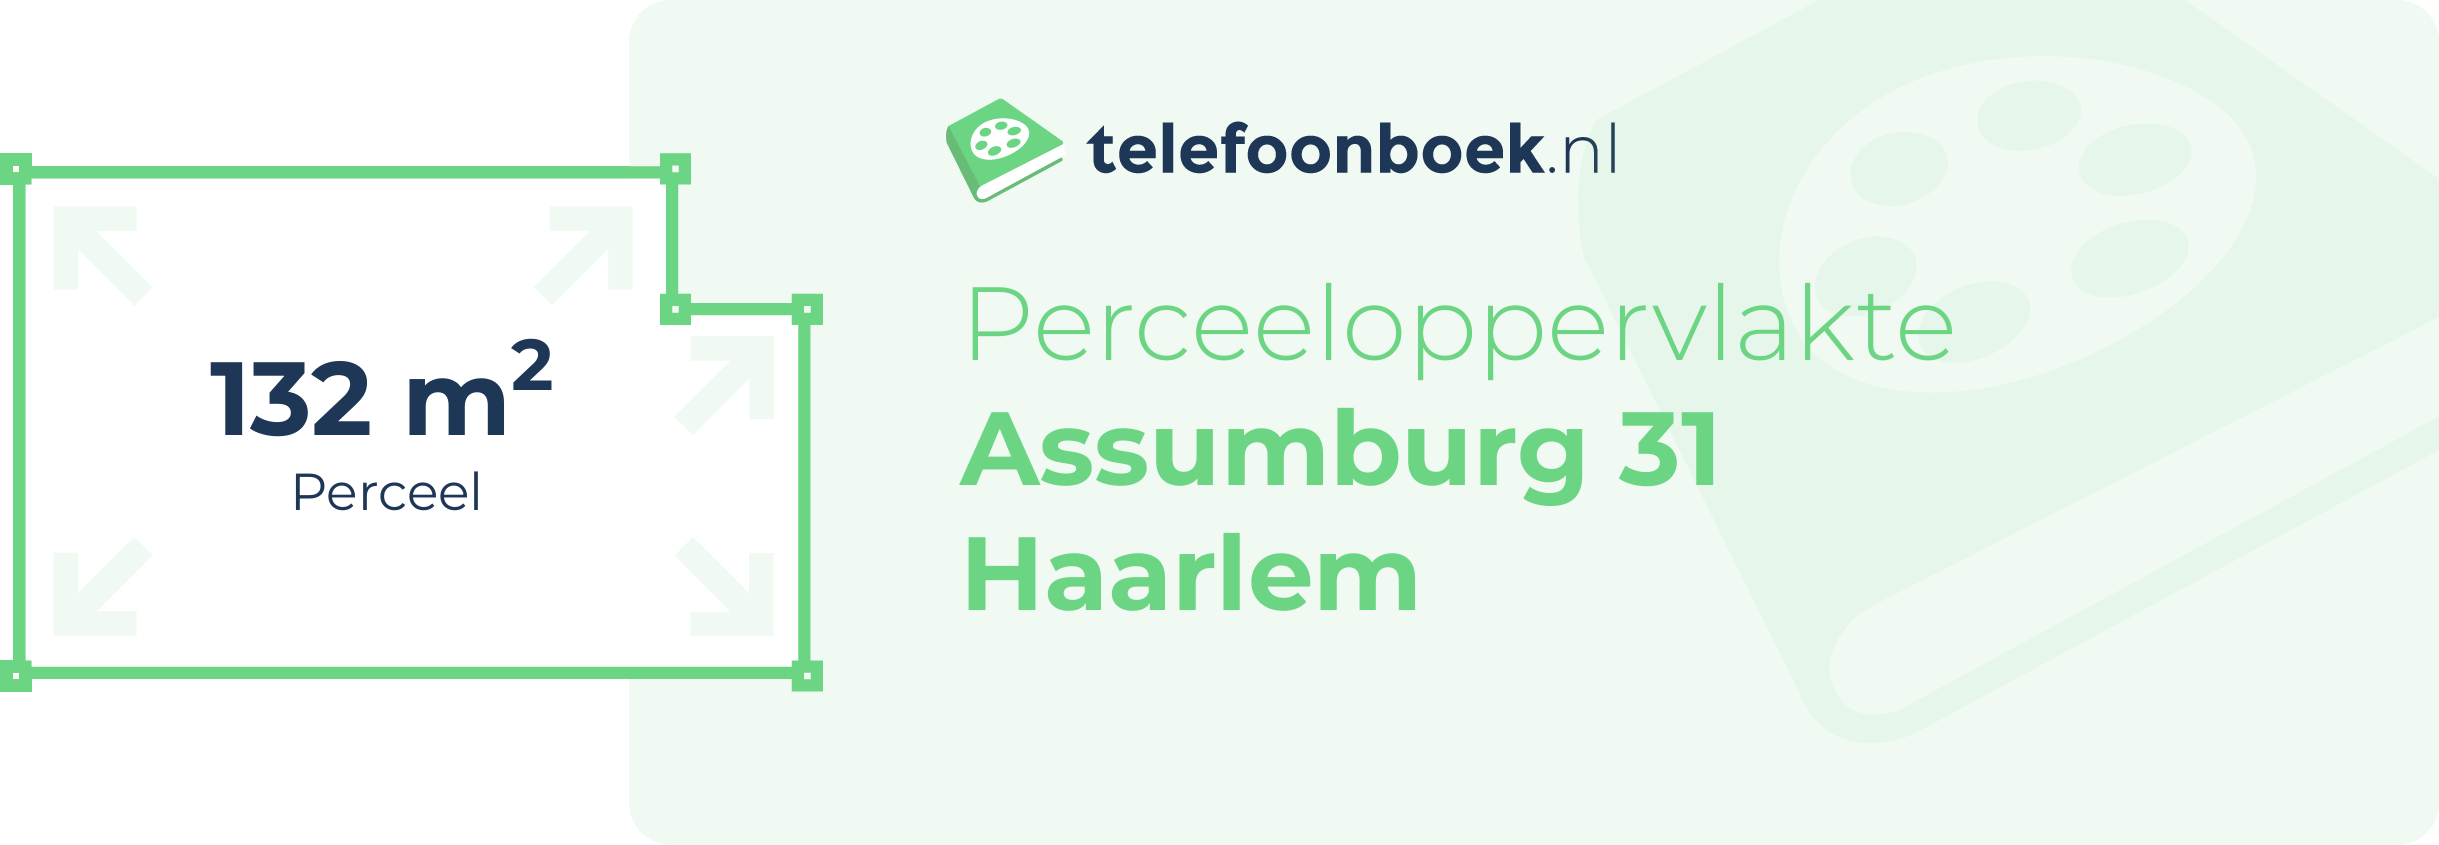 Perceeloppervlakte Assumburg 31 Haarlem